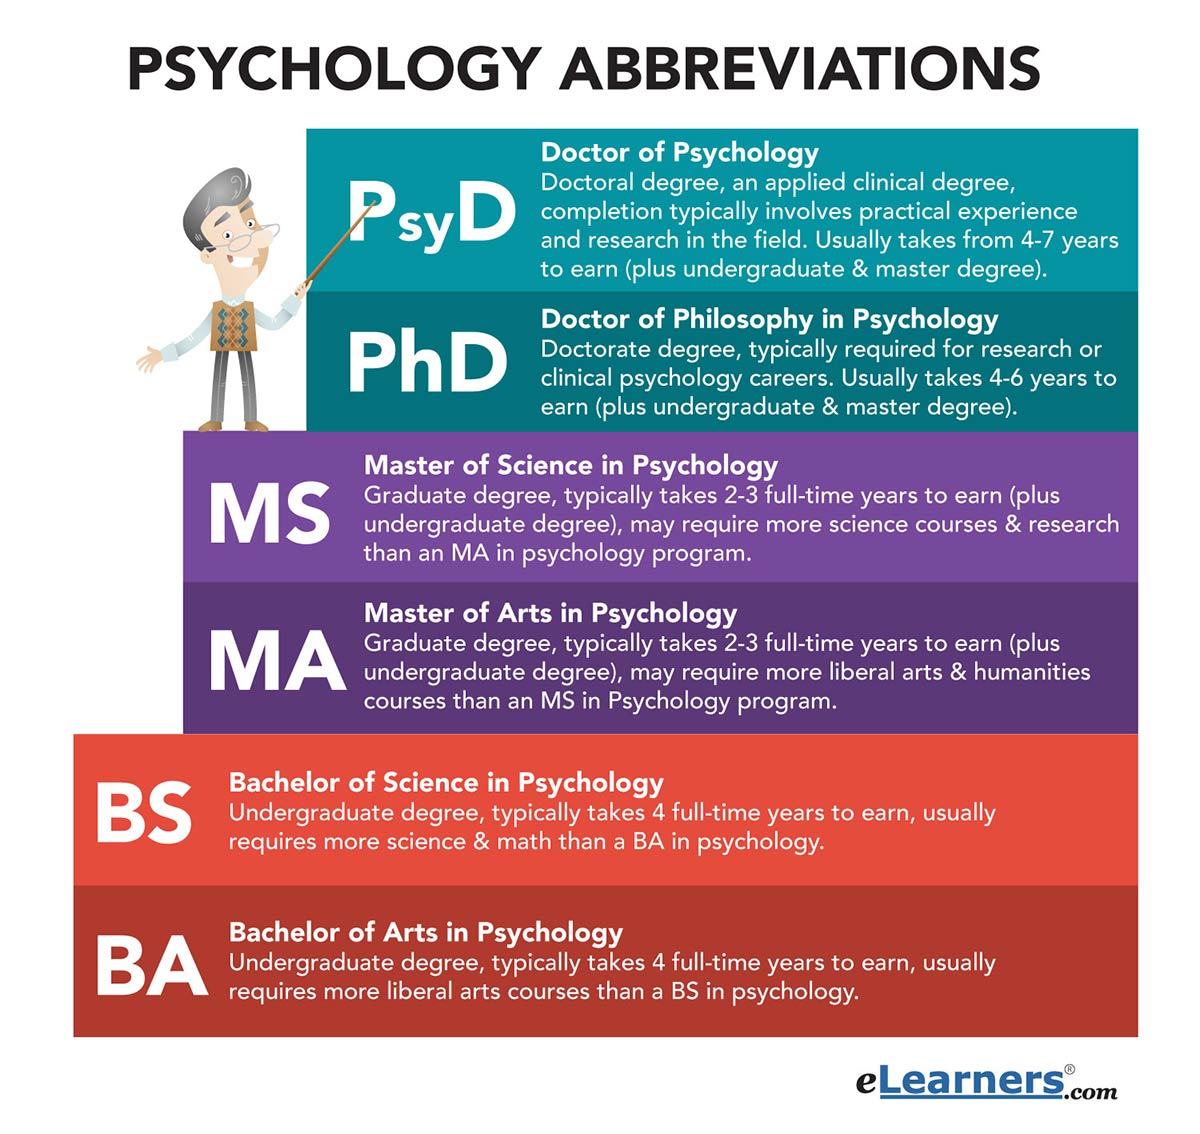 psychology abbreviations - learn common psychology abbreviations